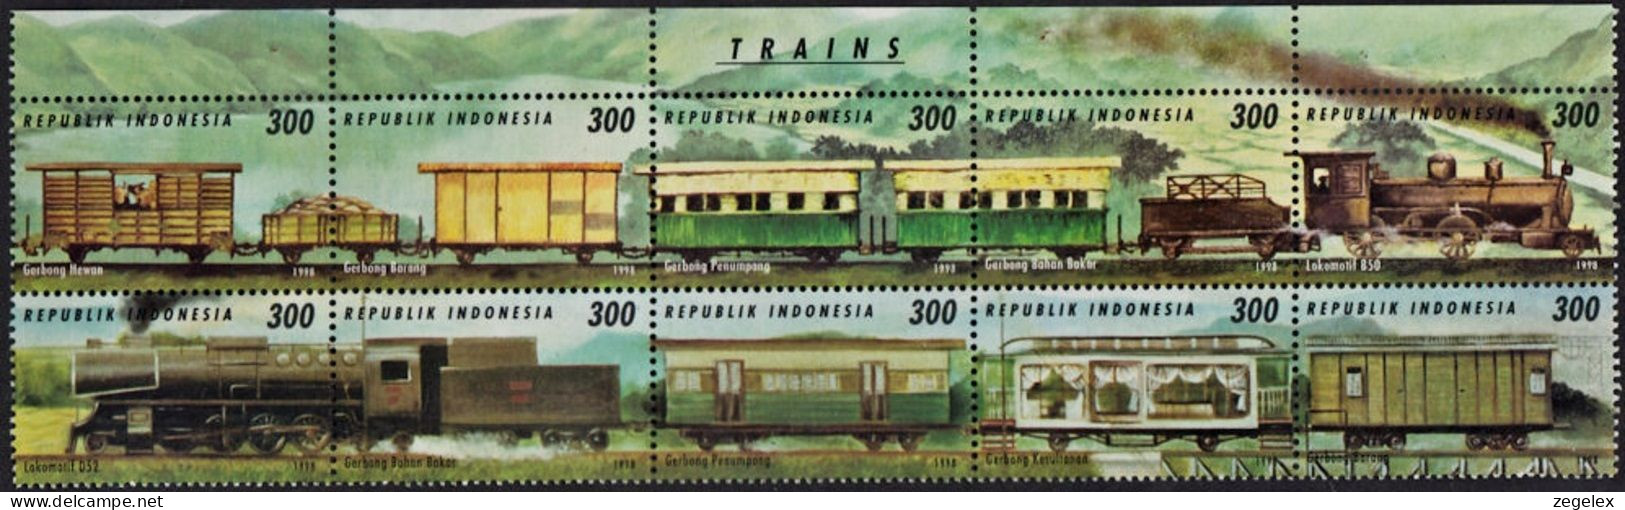 Indonesia 1998 Trains MNH ** ZBL 1877/1886 - Indonesien